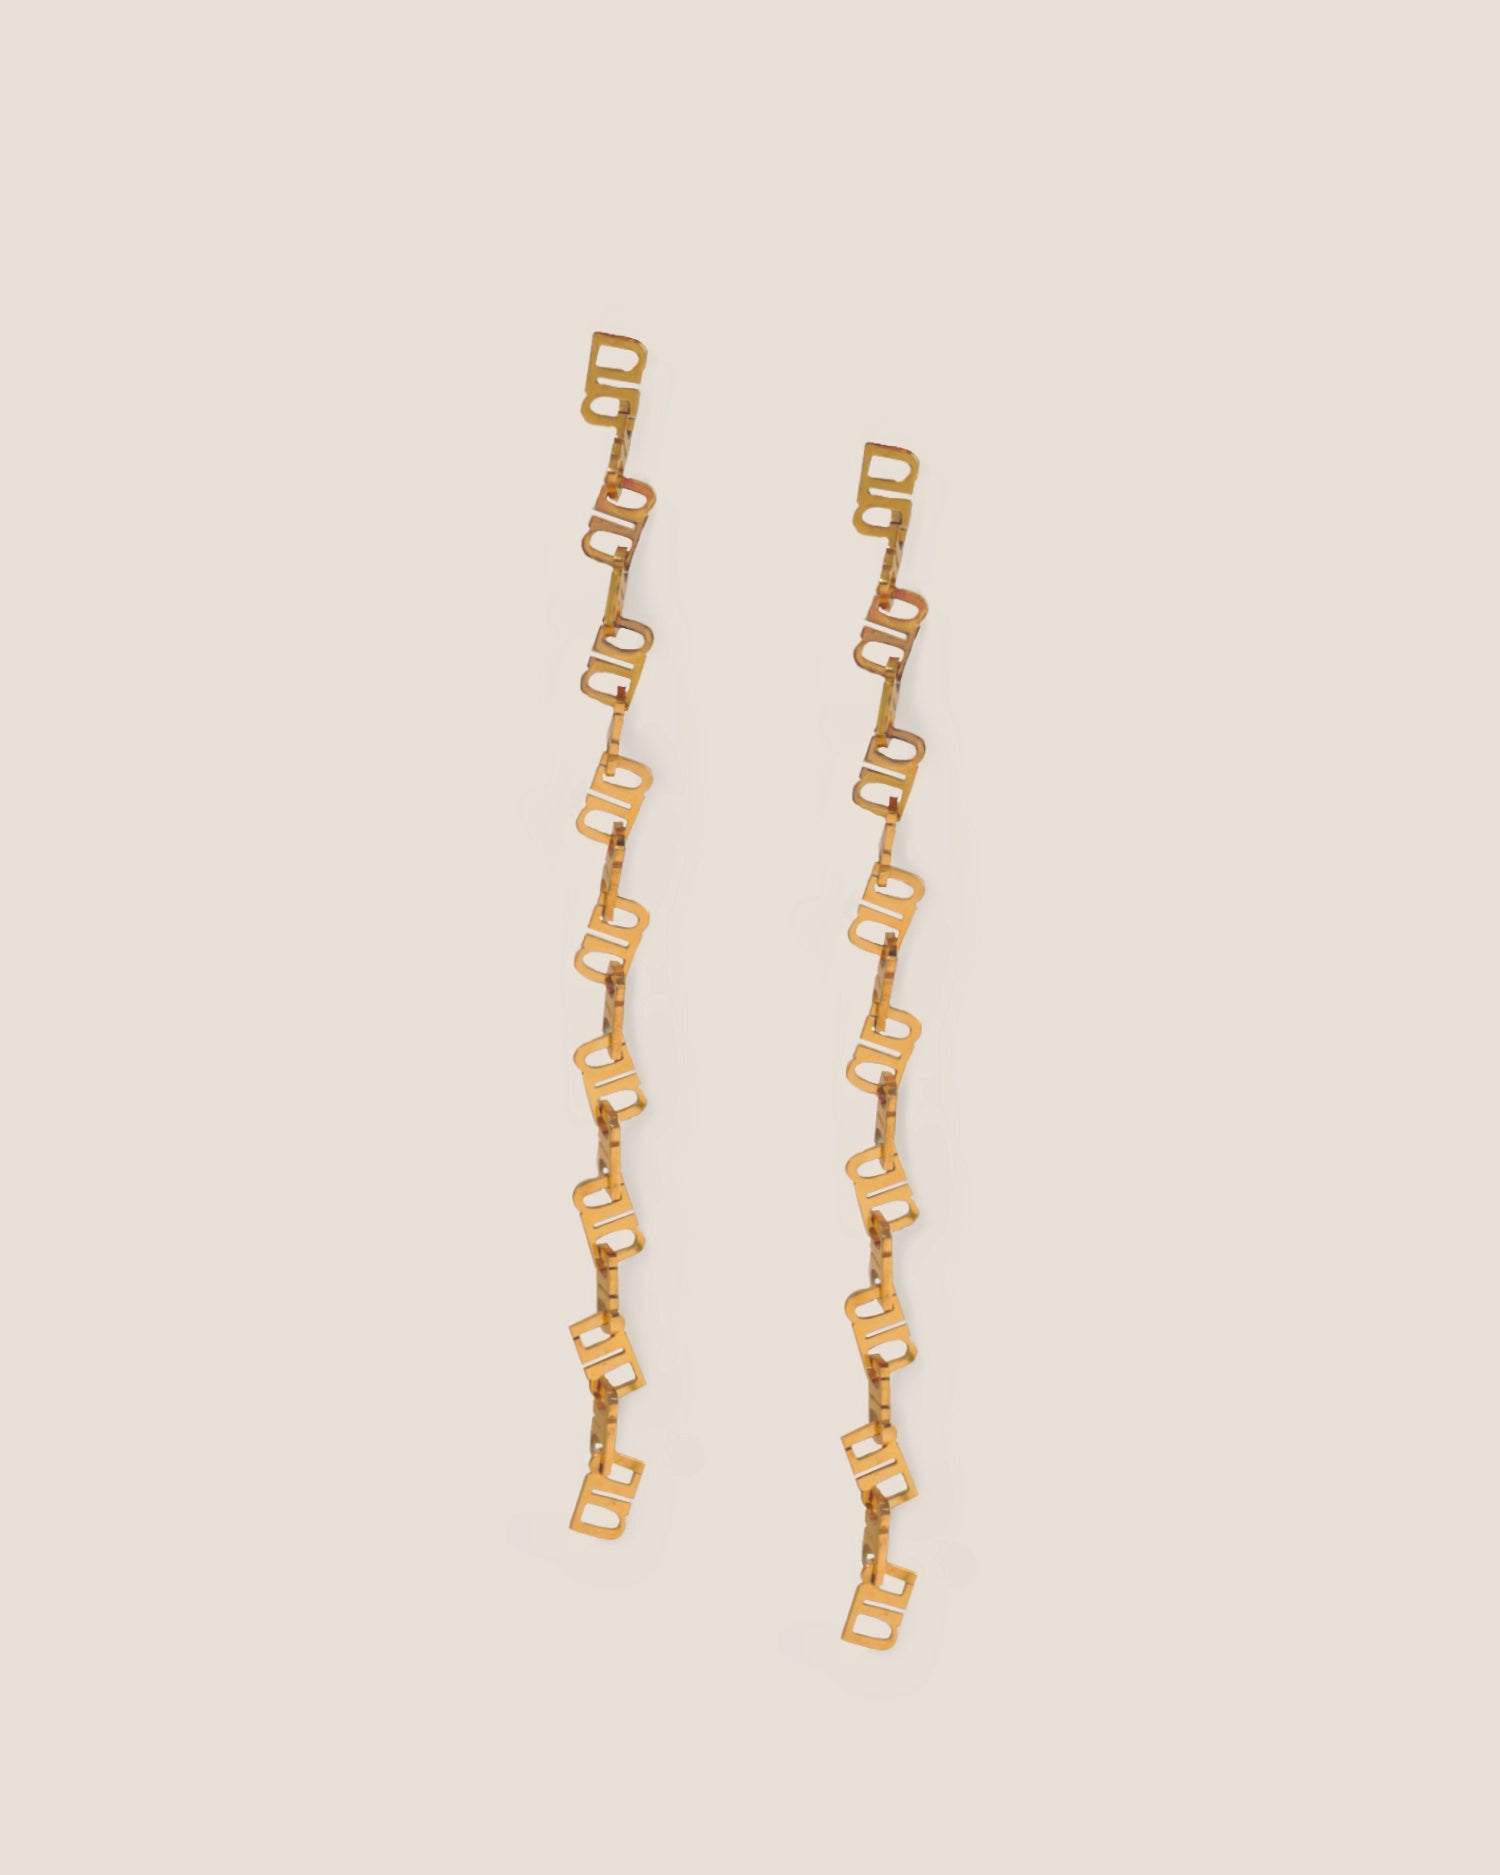 Gung Iconic Drift Gold Earrings